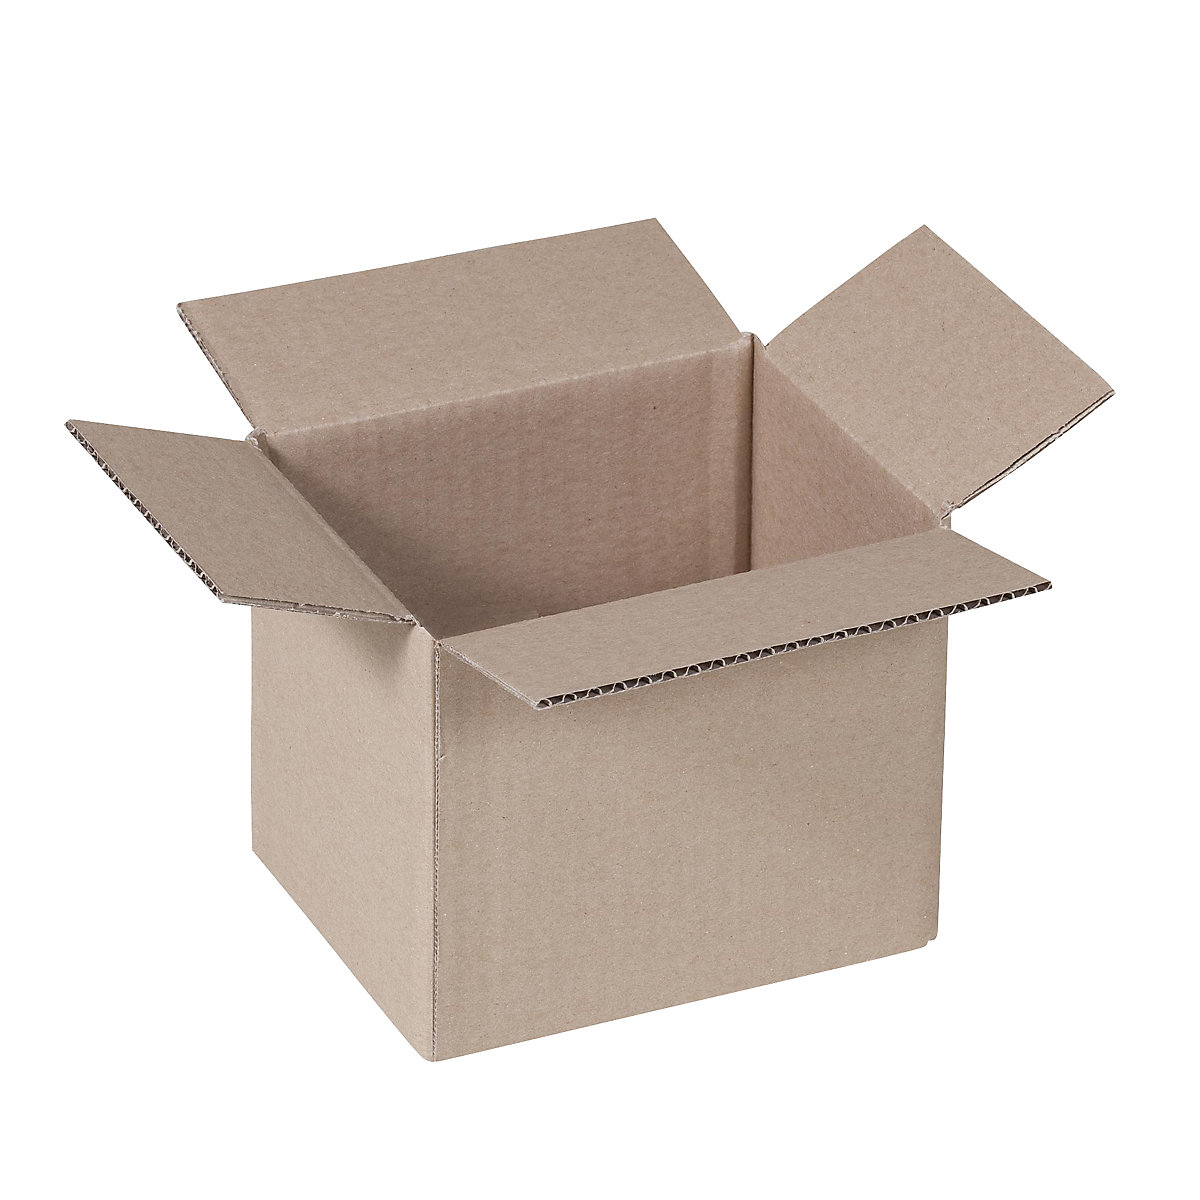 Folding cardboard box, FEFCO 0201, made of single fluted cardboard, internal dimensions 305 x 215 x 290 mm, pack of 50-25